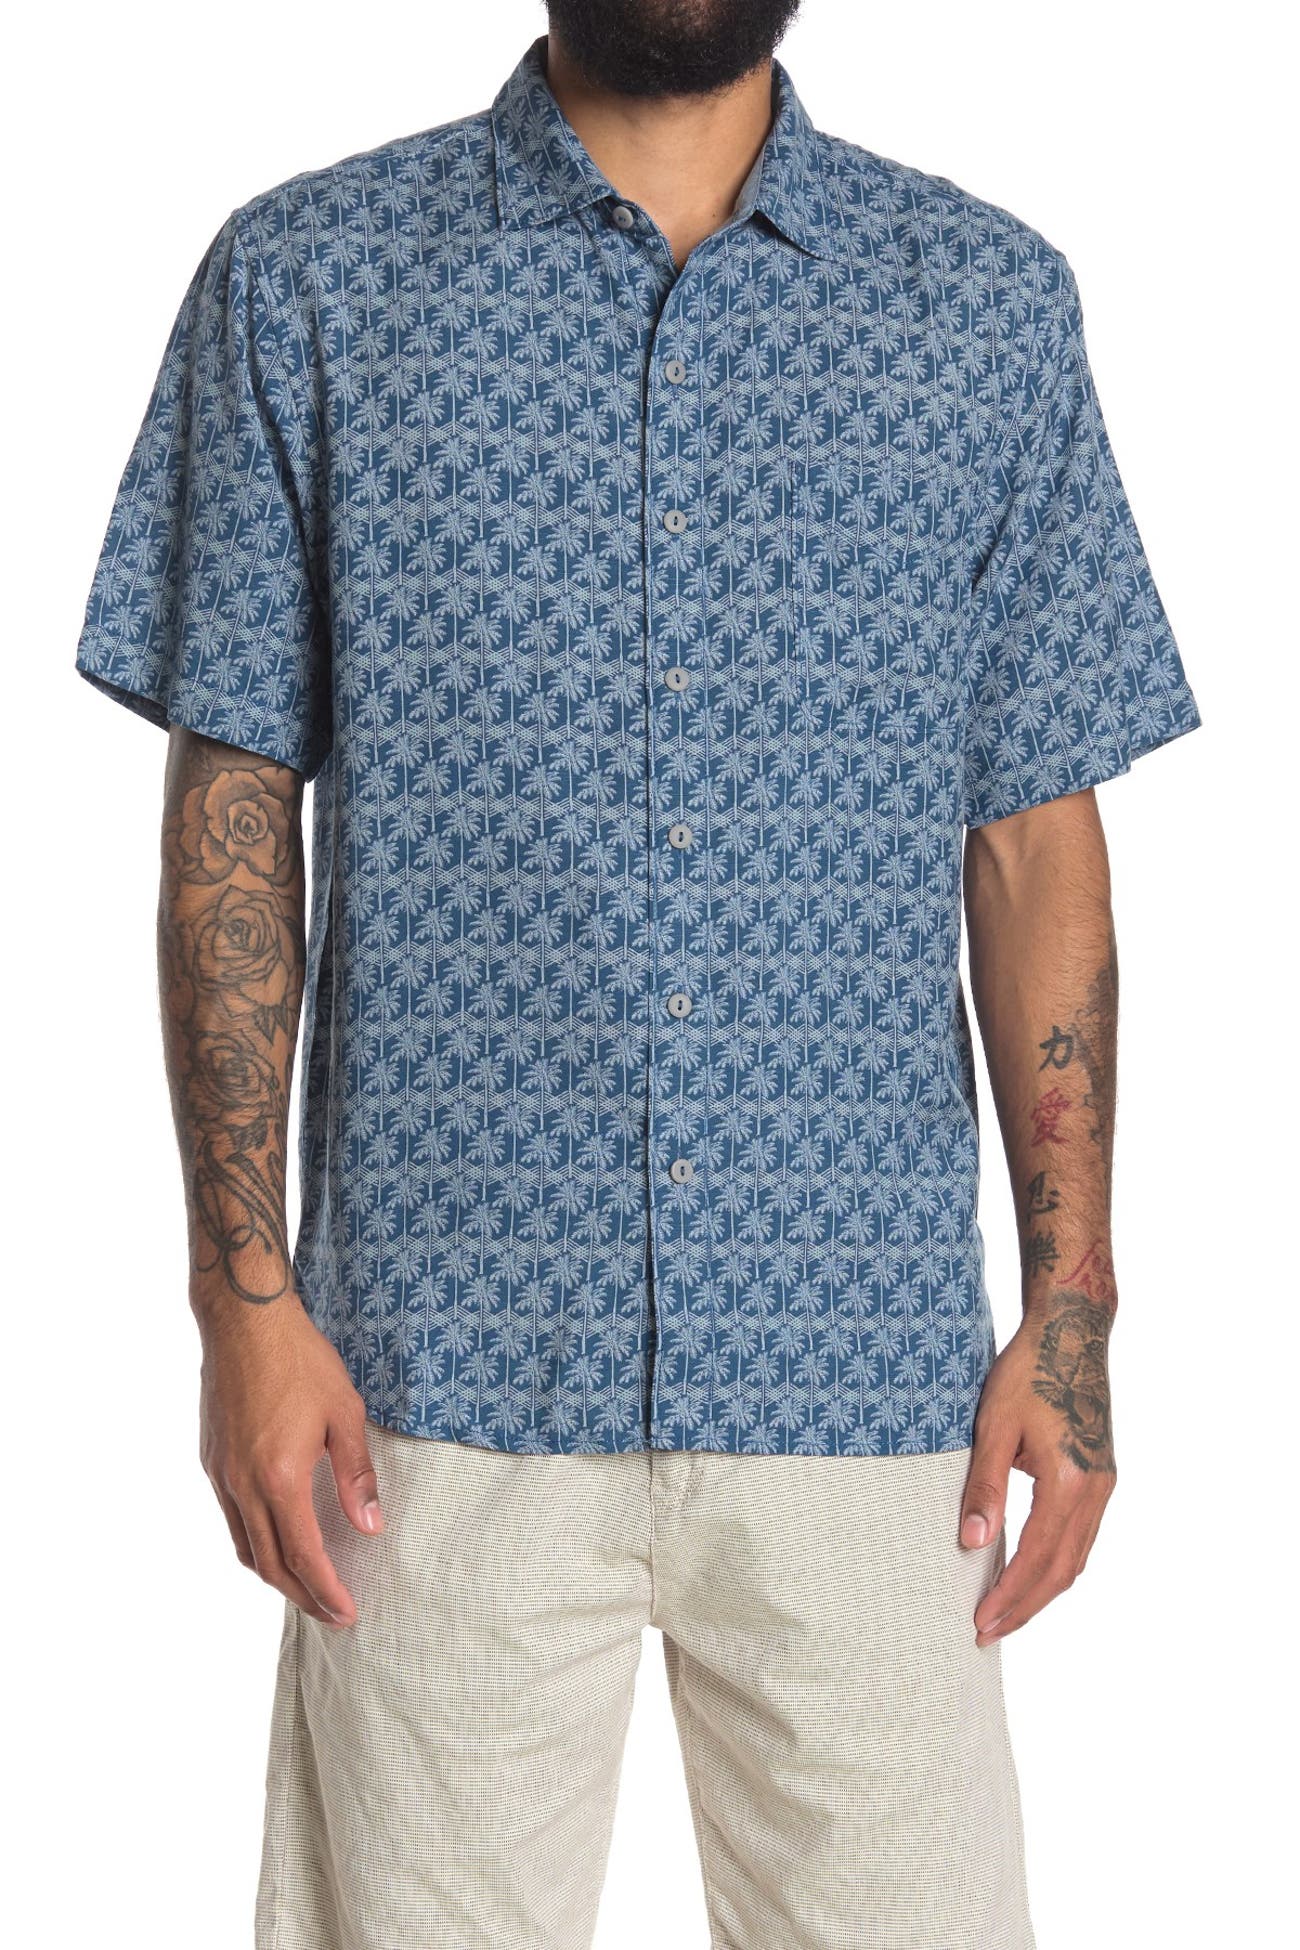 Tommy Bahama | Palms Away Geo Short Sleeve Shirt | HauteLook